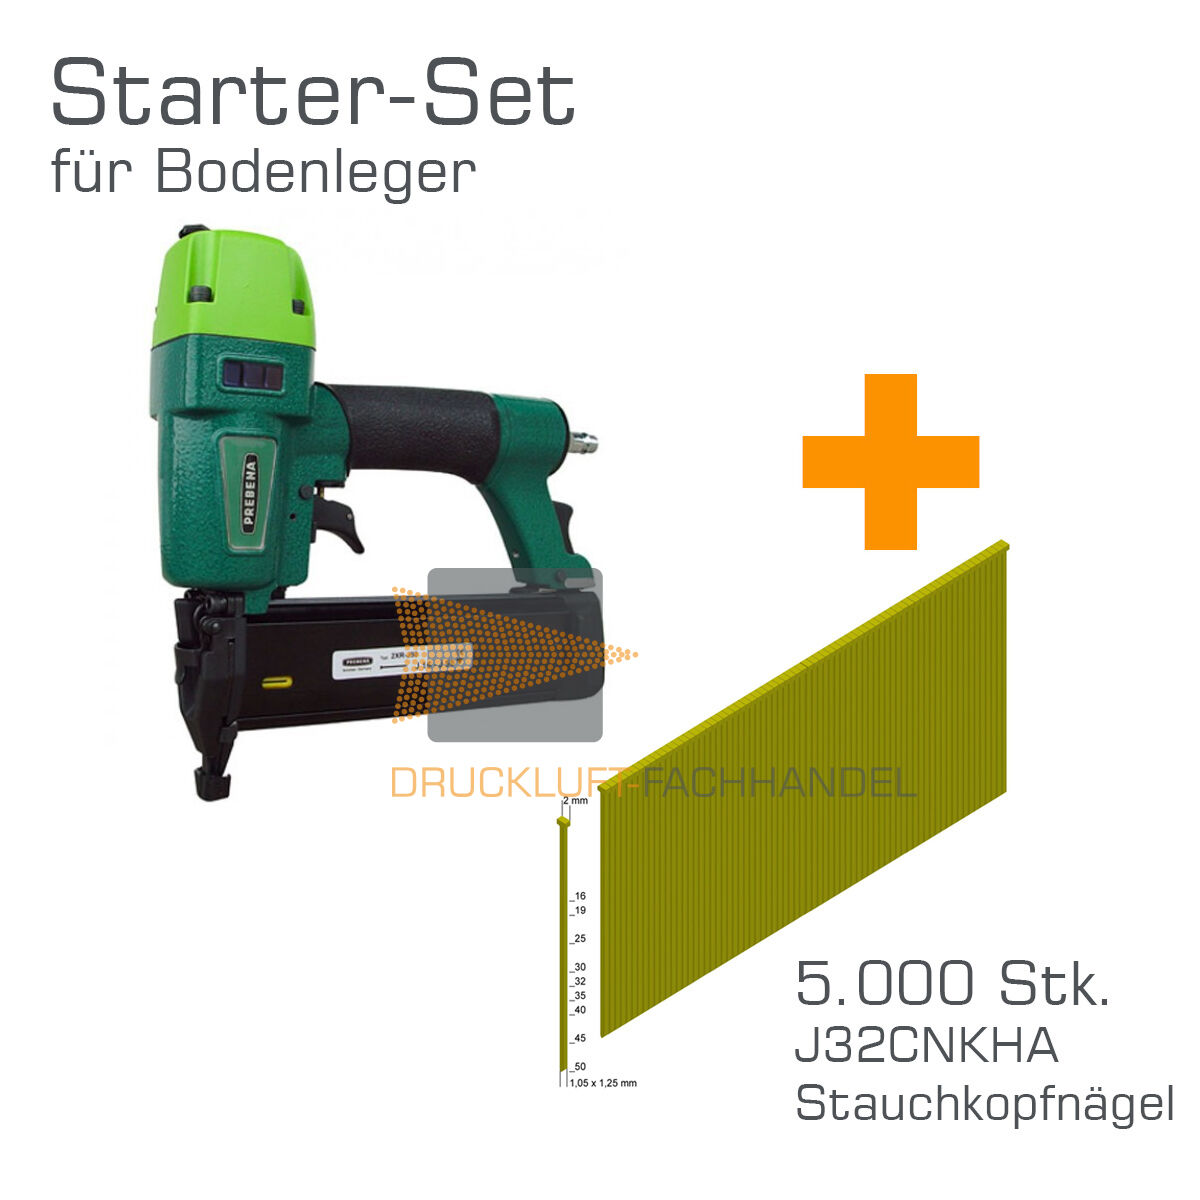 AKTION Prebena Druckluftnagler 2XR-J50 + J32CNKHA Stauchkopfnägel - Starter-Set für Bodenleger